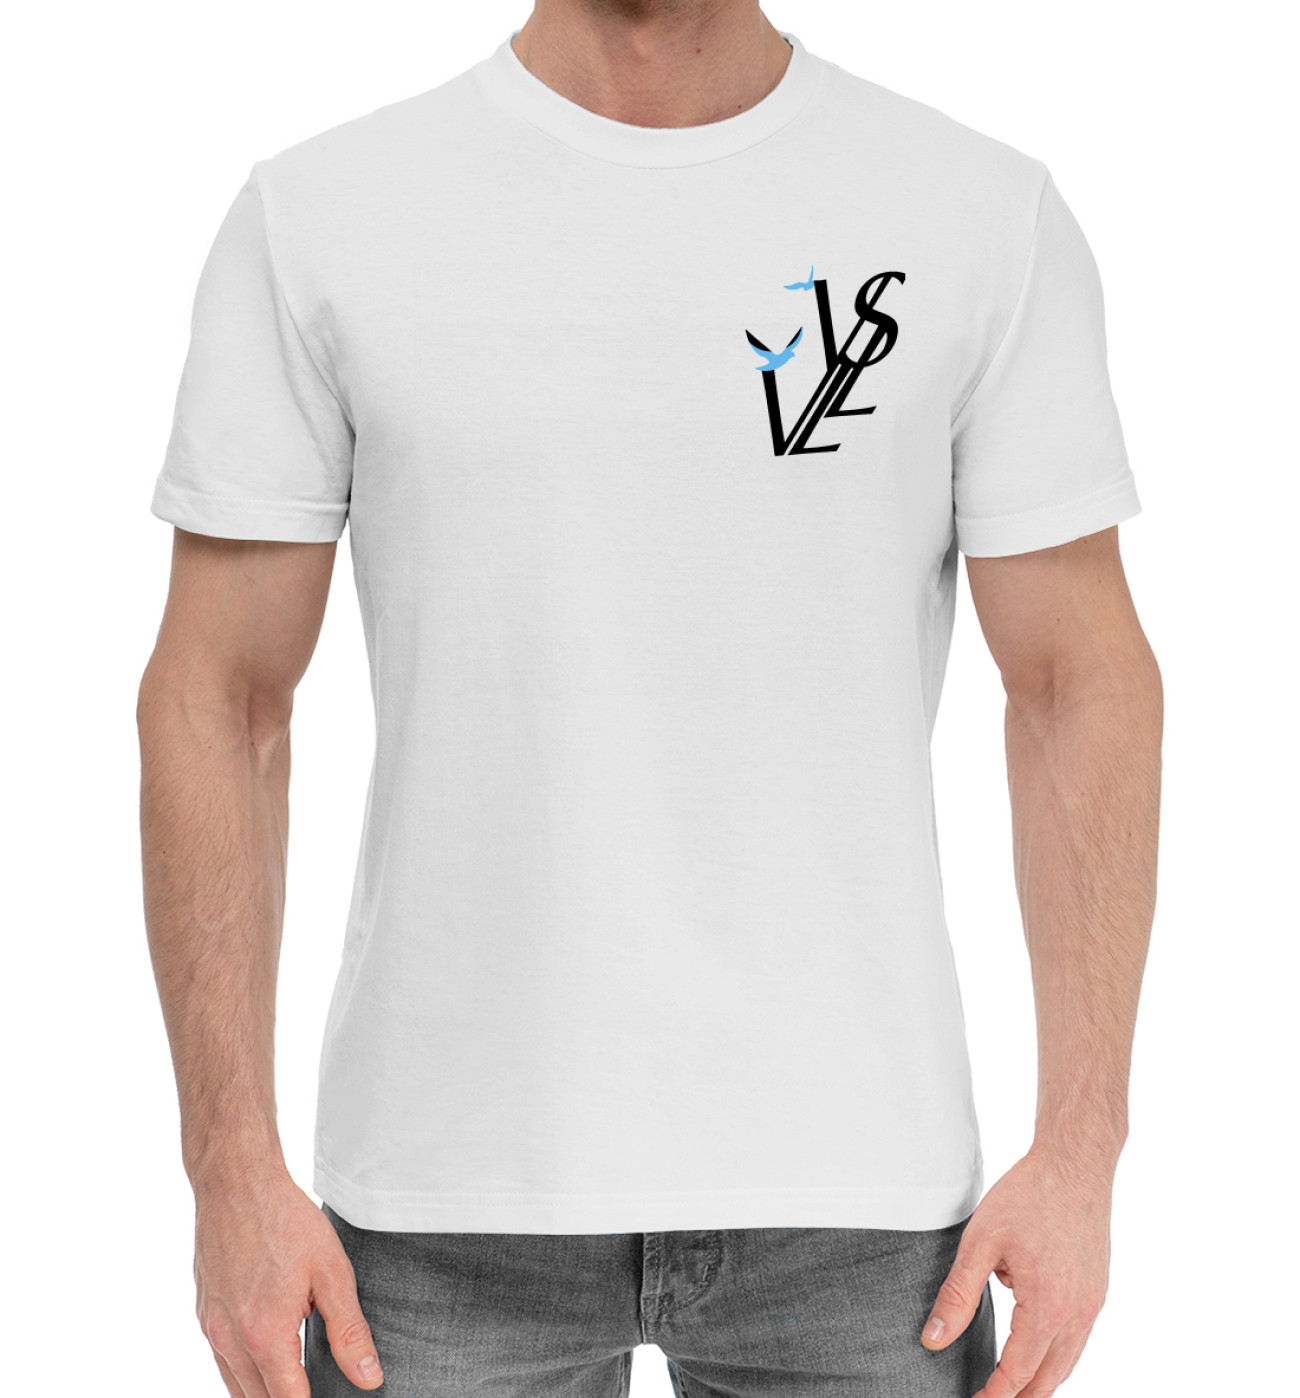 Мужская Хлопковая футболка Репер - SODA LUV, артикул: MZK-653434-hfu-2